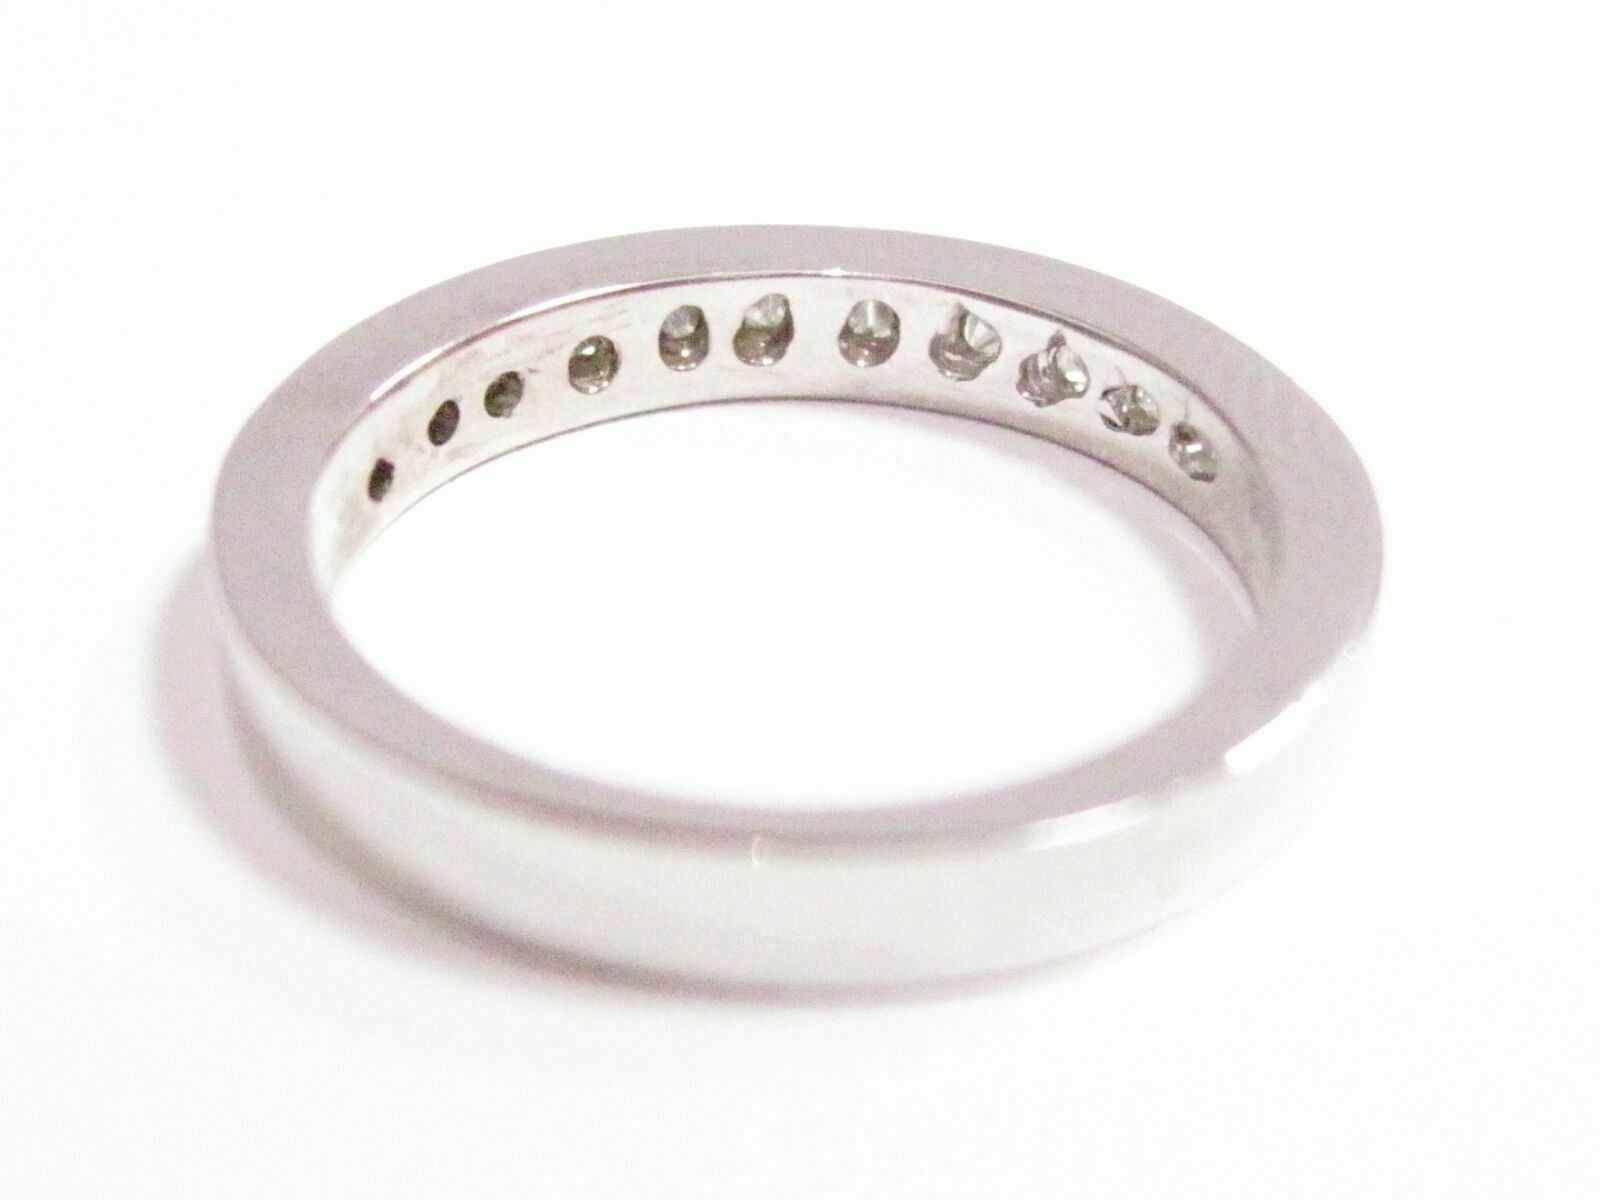 .56 TCW 12 Natural Princess Cut Diamond Ring/Band Size 5.5 H SI1 14k White Gold